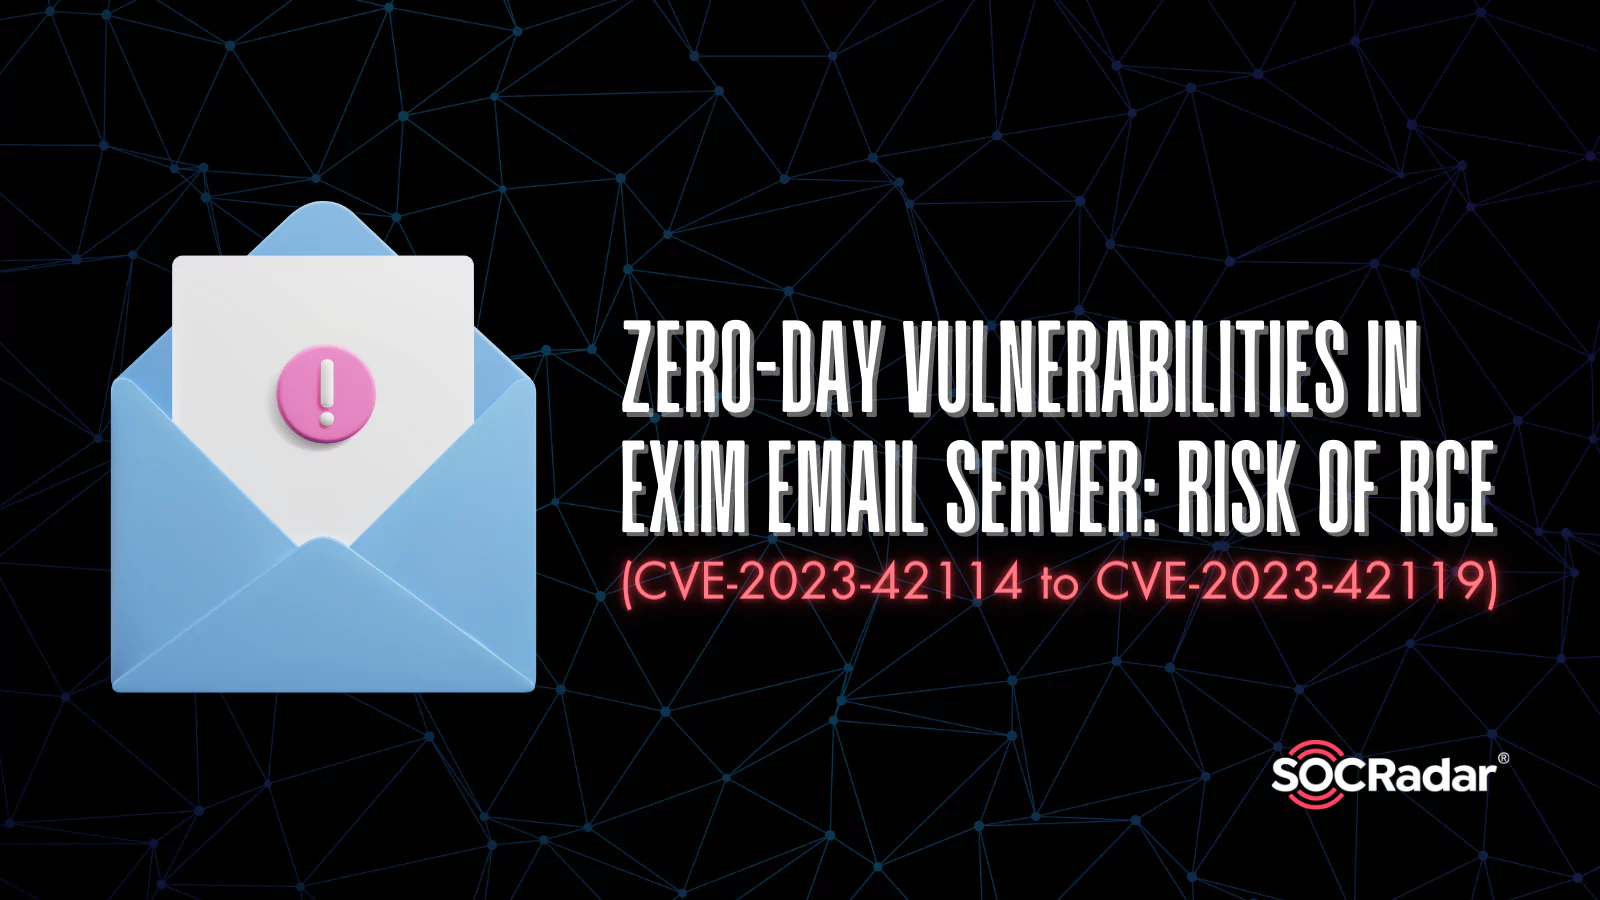 SOCRadar® Cyber Intelligence Inc. | Zero-Day Vulnerabilities in Exim Email Server: Risk of RCE (CVE-2023-42115, CVE-2023-42116, CVE-2023-42117, and More)